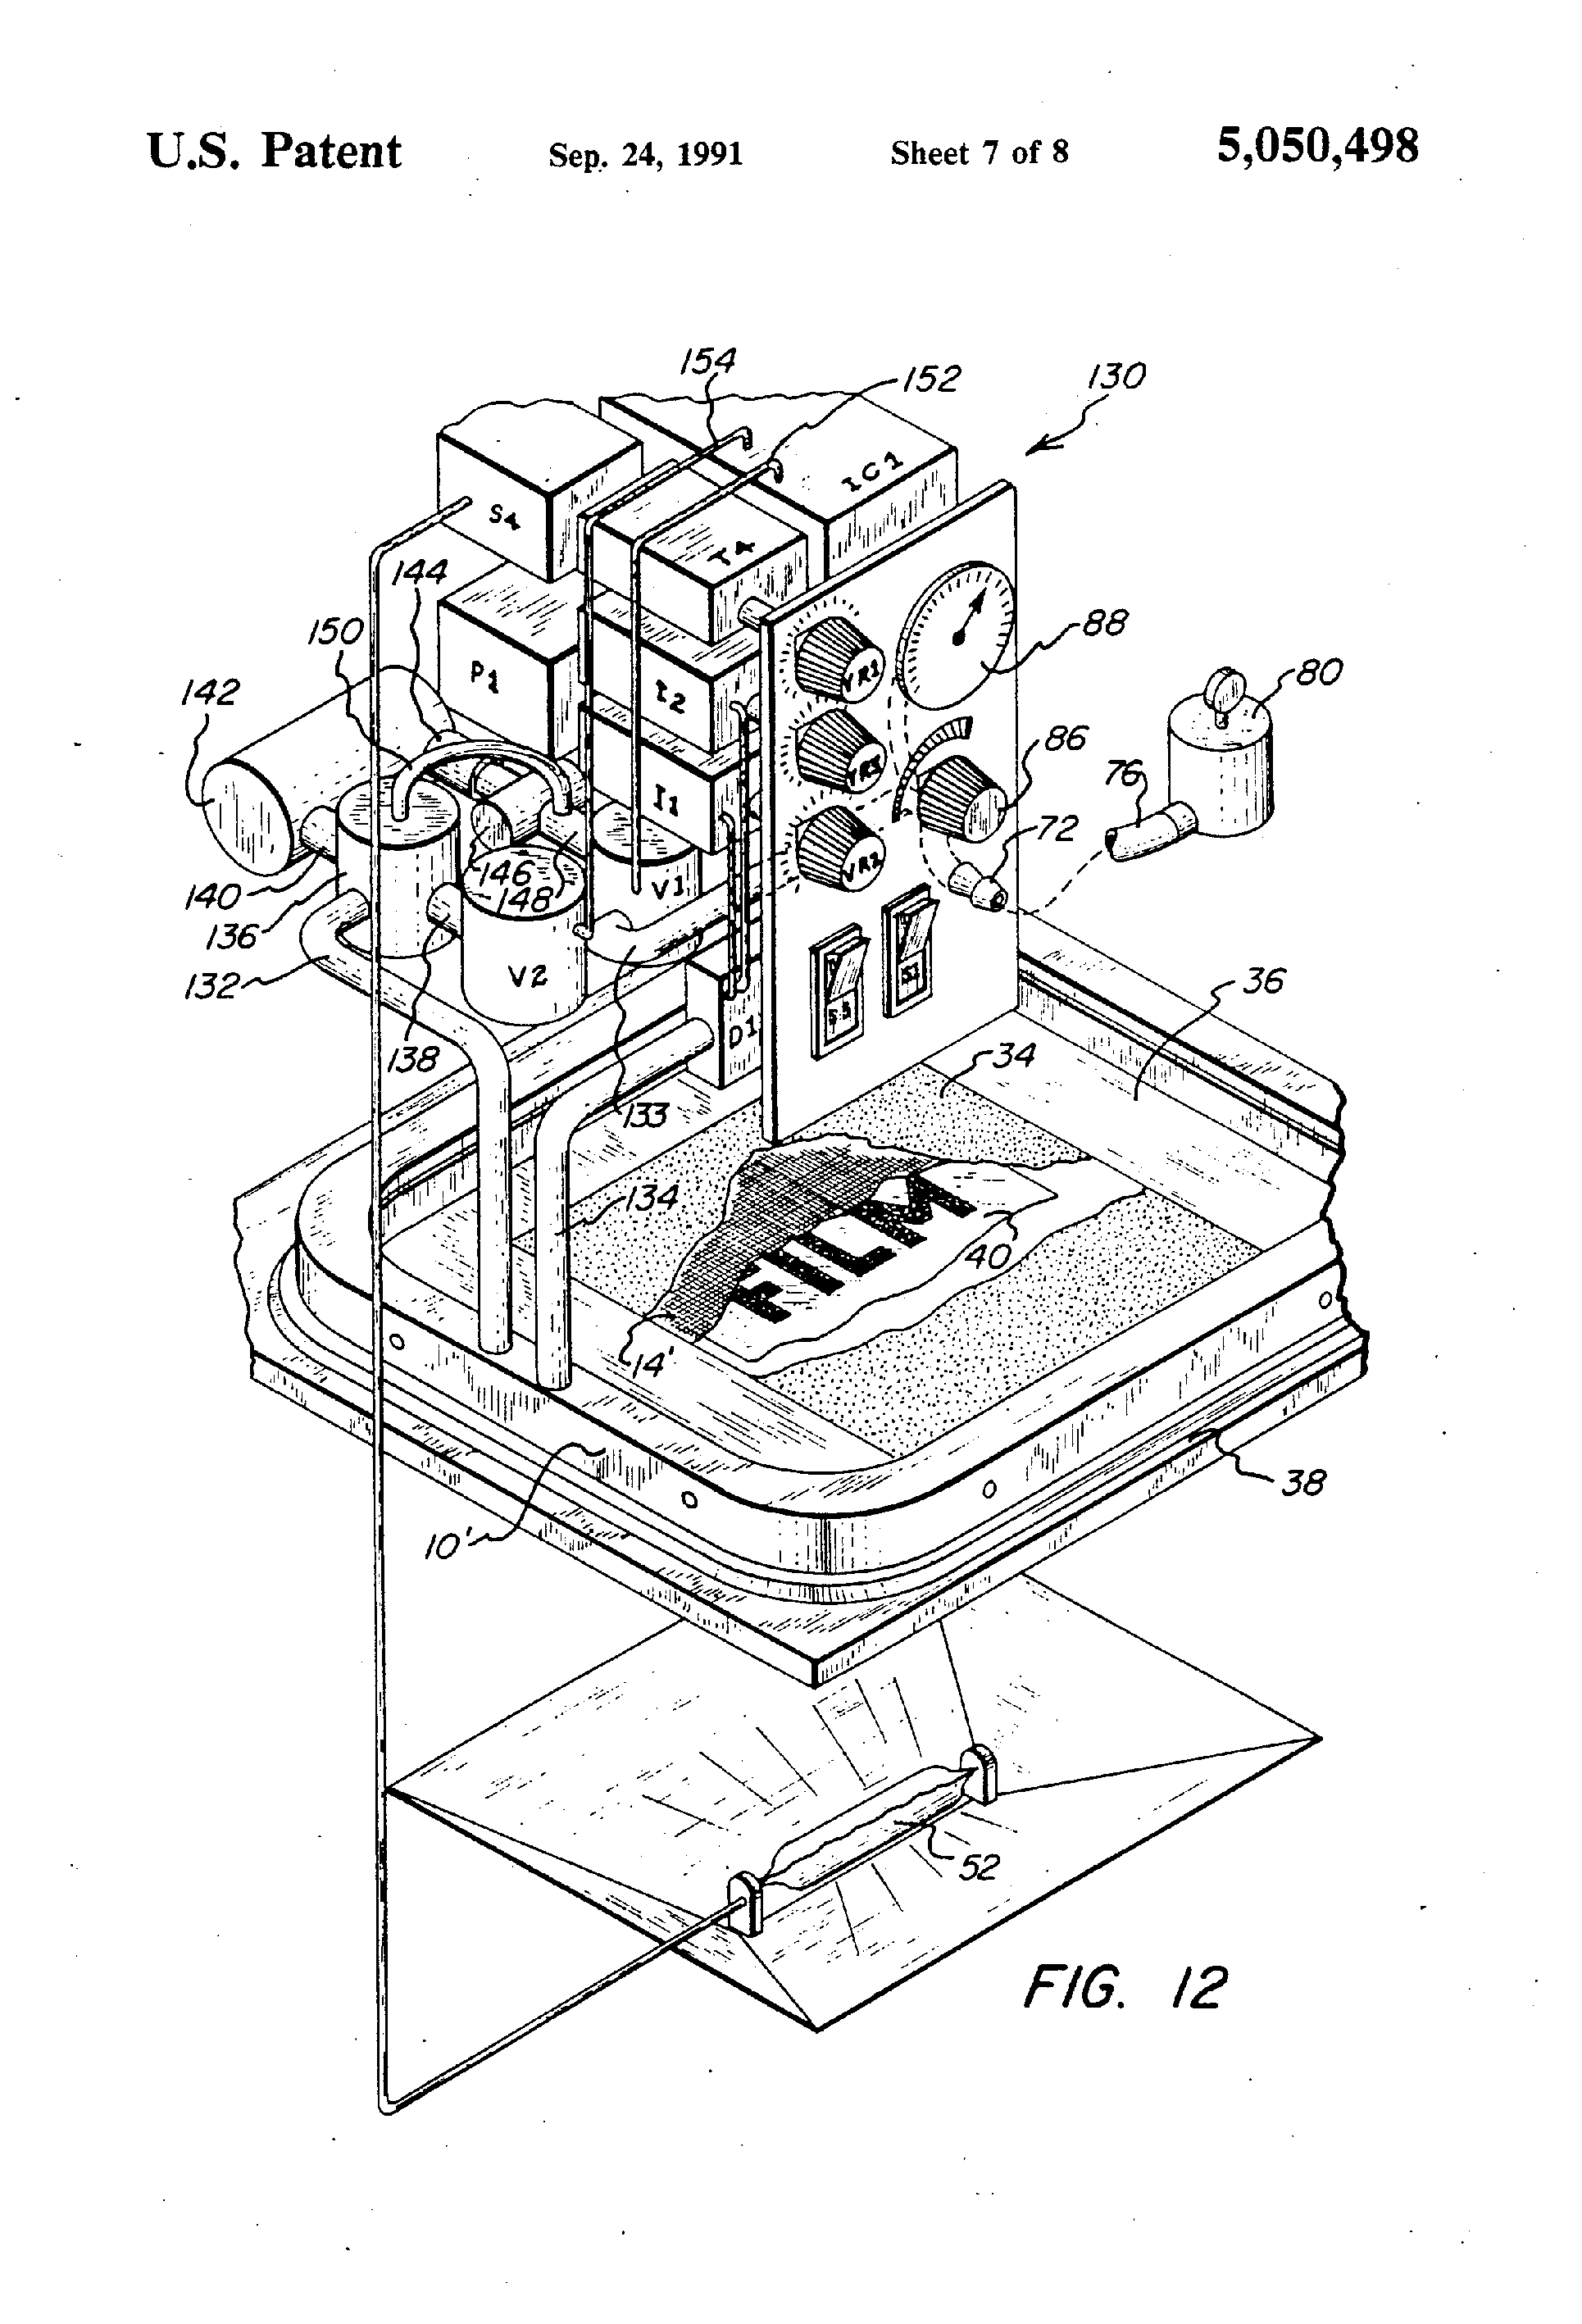 patent drawing.gif